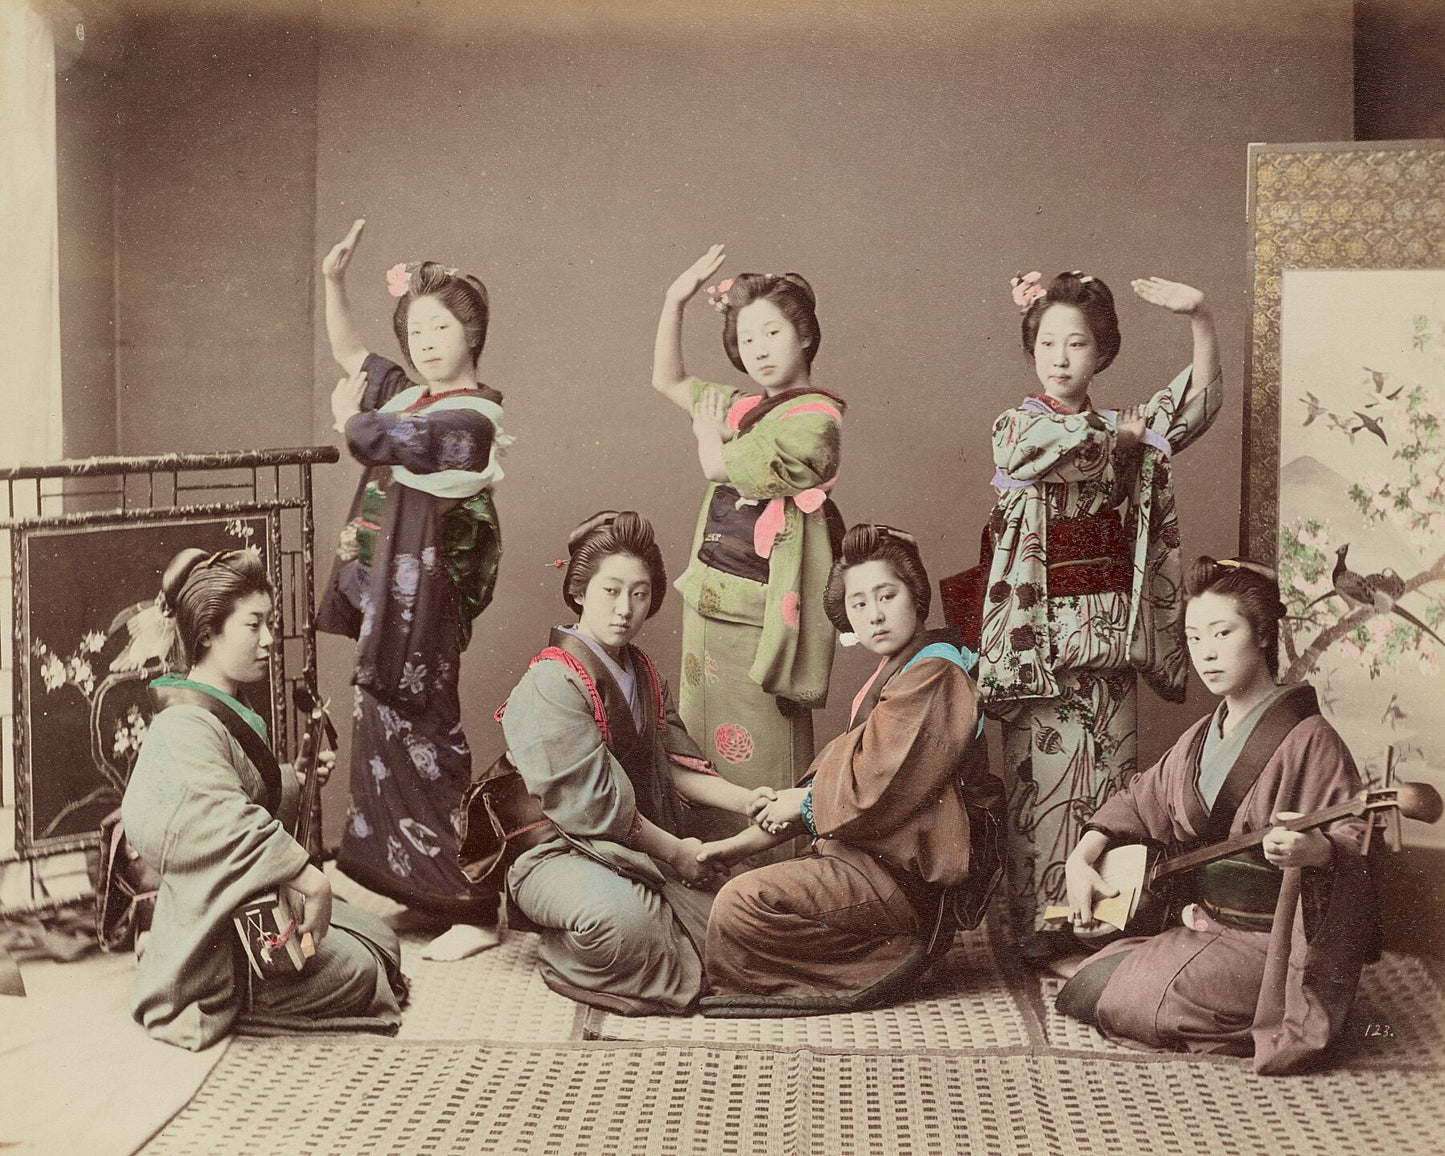 Group of Young Women by Kusakabe Kimbei - c.1880